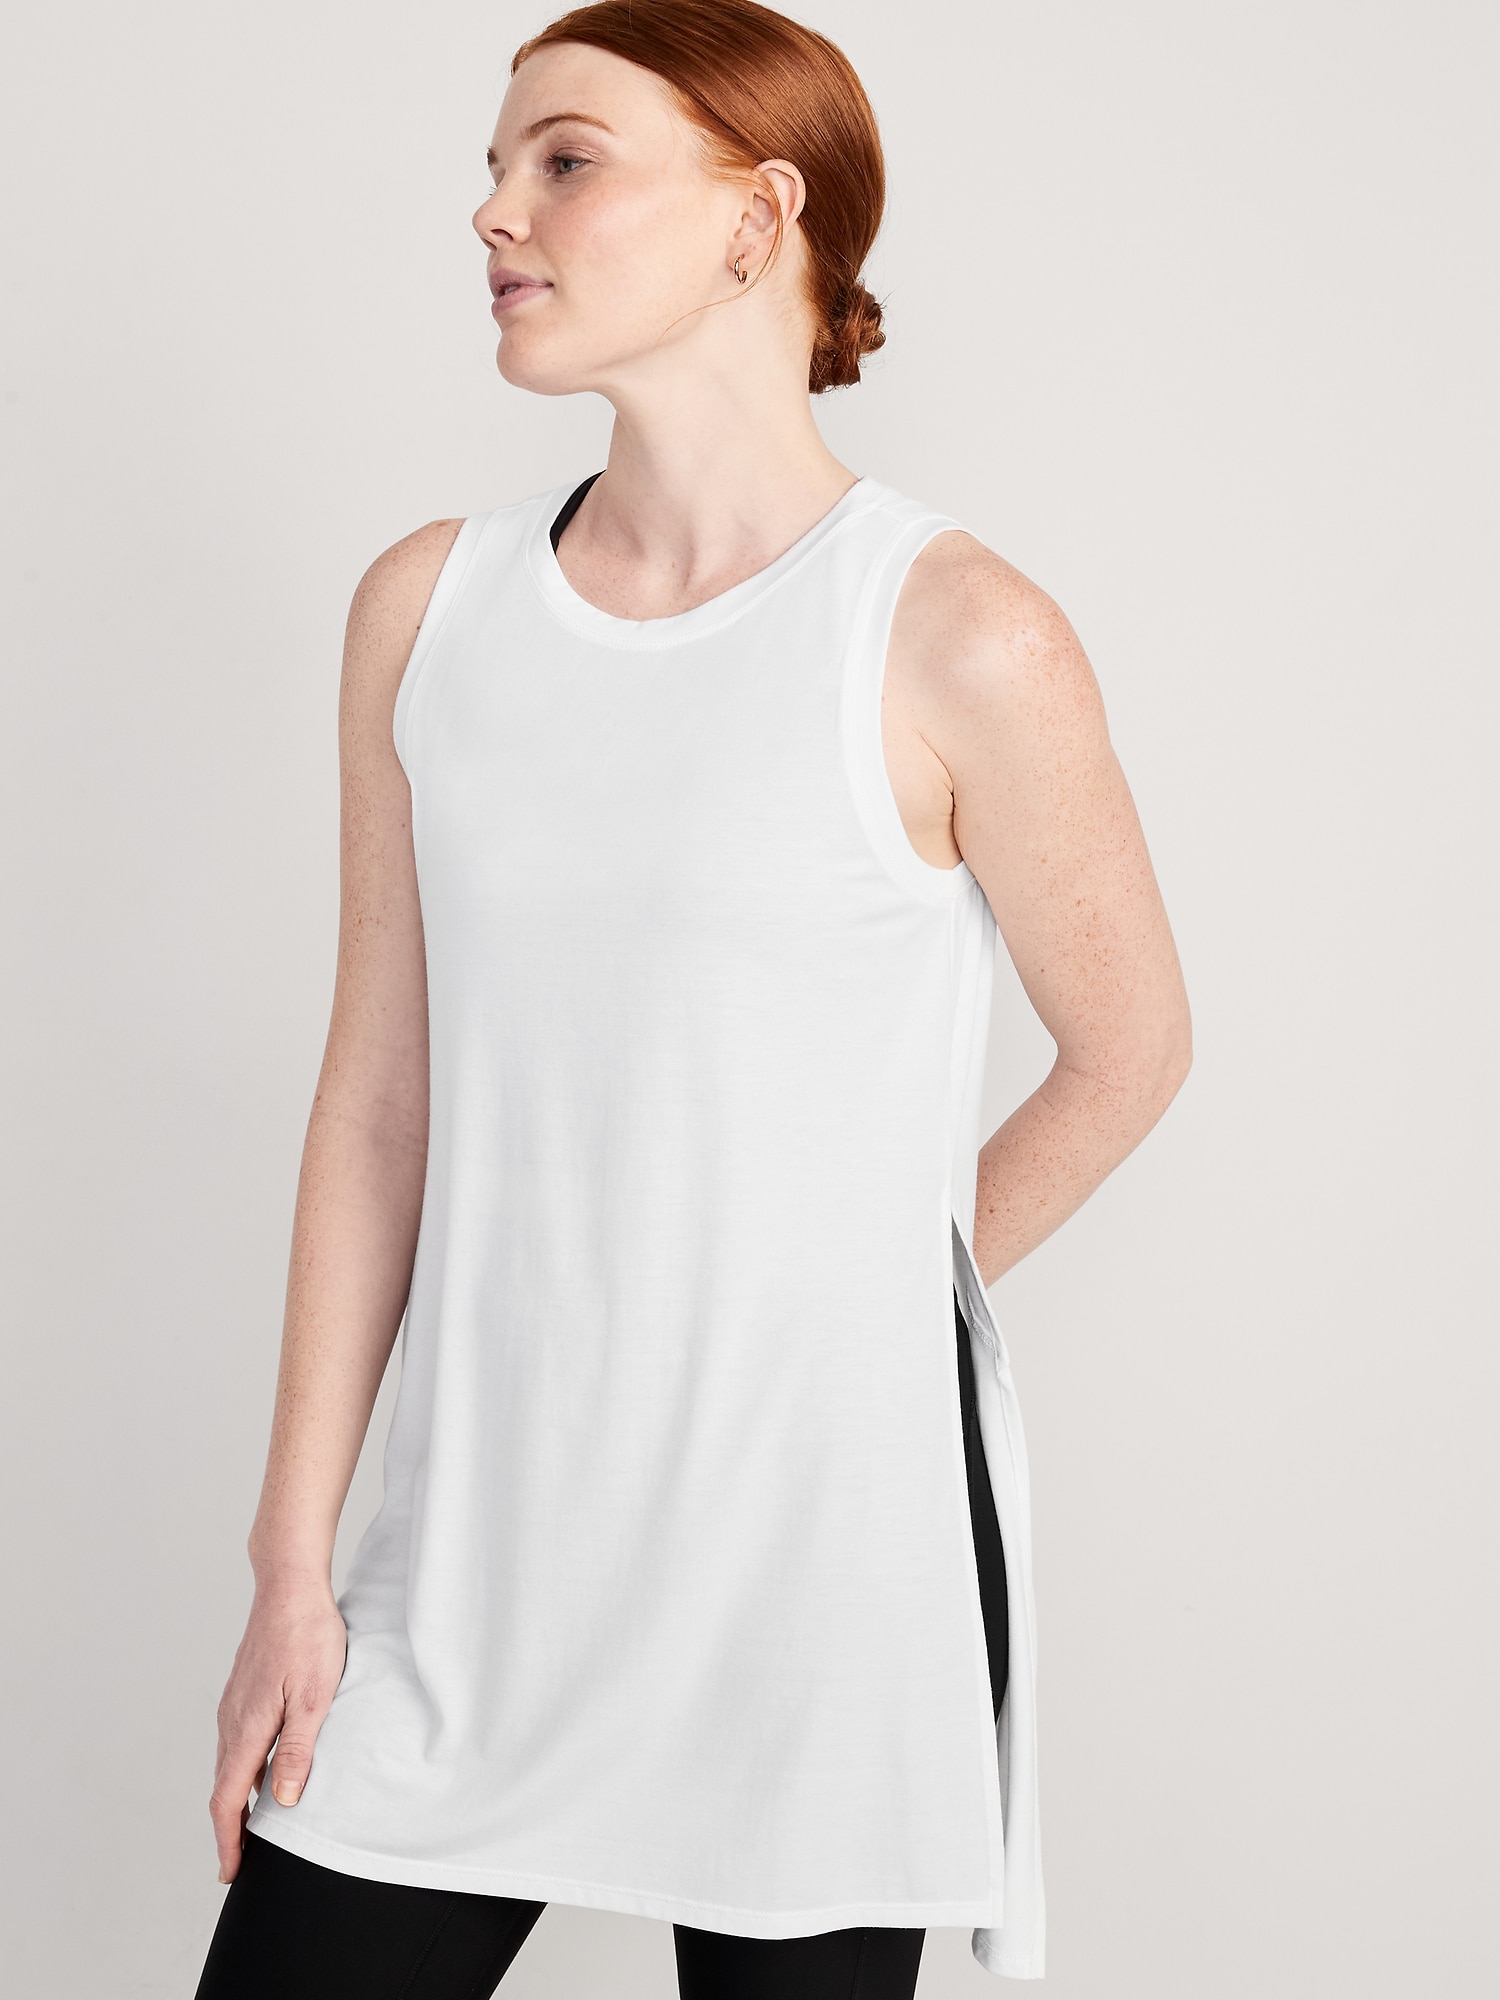 UltraLite All-Day Sleeveless Tunic for Women | Old Navy